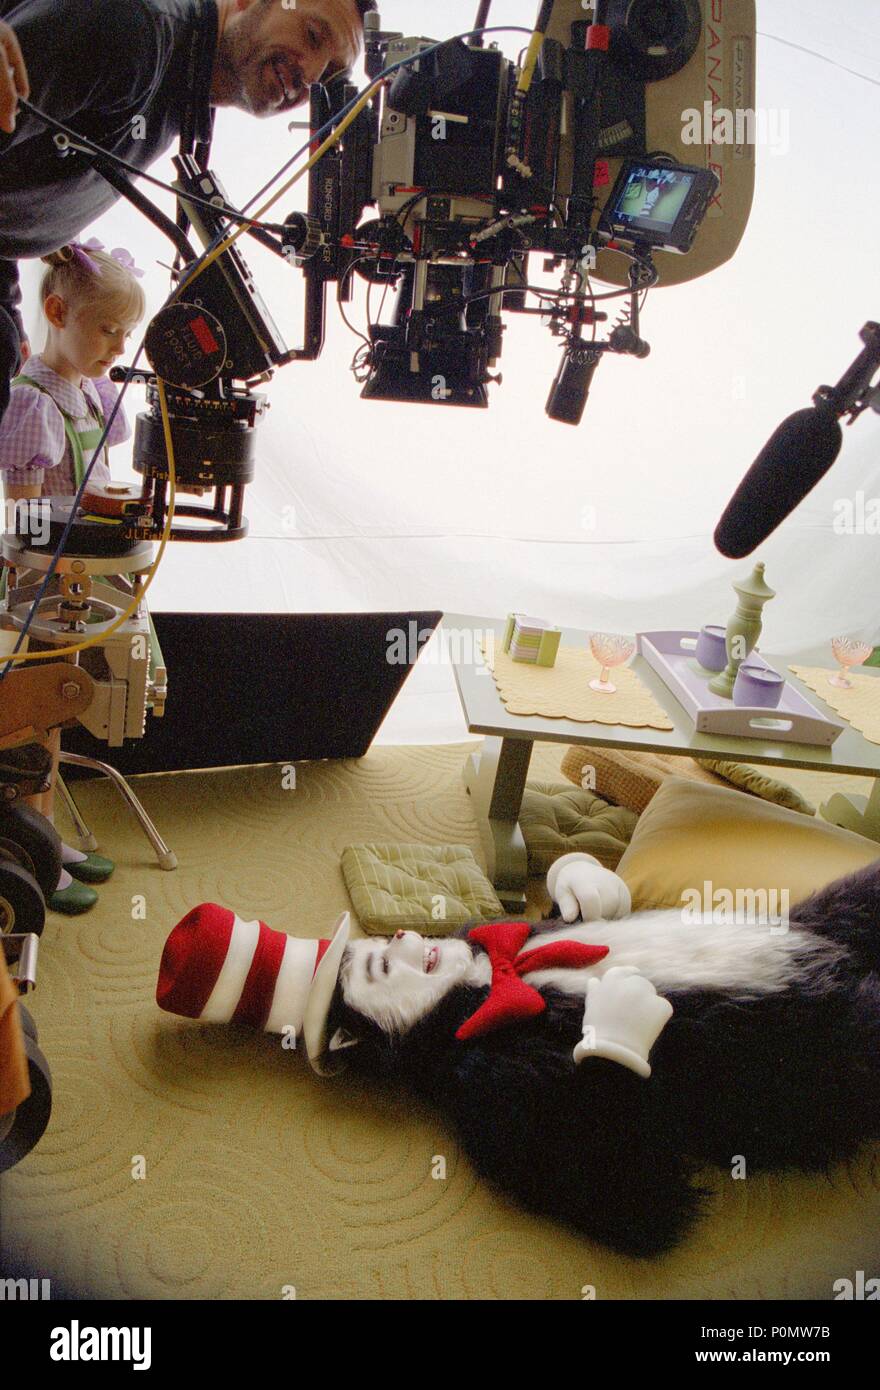 Original Film Title: DR. SEUSS' THE CAT IN THE HAT.  English Title: DR. SEUSS' THE CAT IN THE HAT.  Film Director: BO WELCH.  Year: 2003.  Stars: MIKE MYERS; DAKOTA FANNING. Credit: UNIVERSAL STUDIOS/DREAMWORKS / GORDON, MELINDA SUE / Album Stock Photo